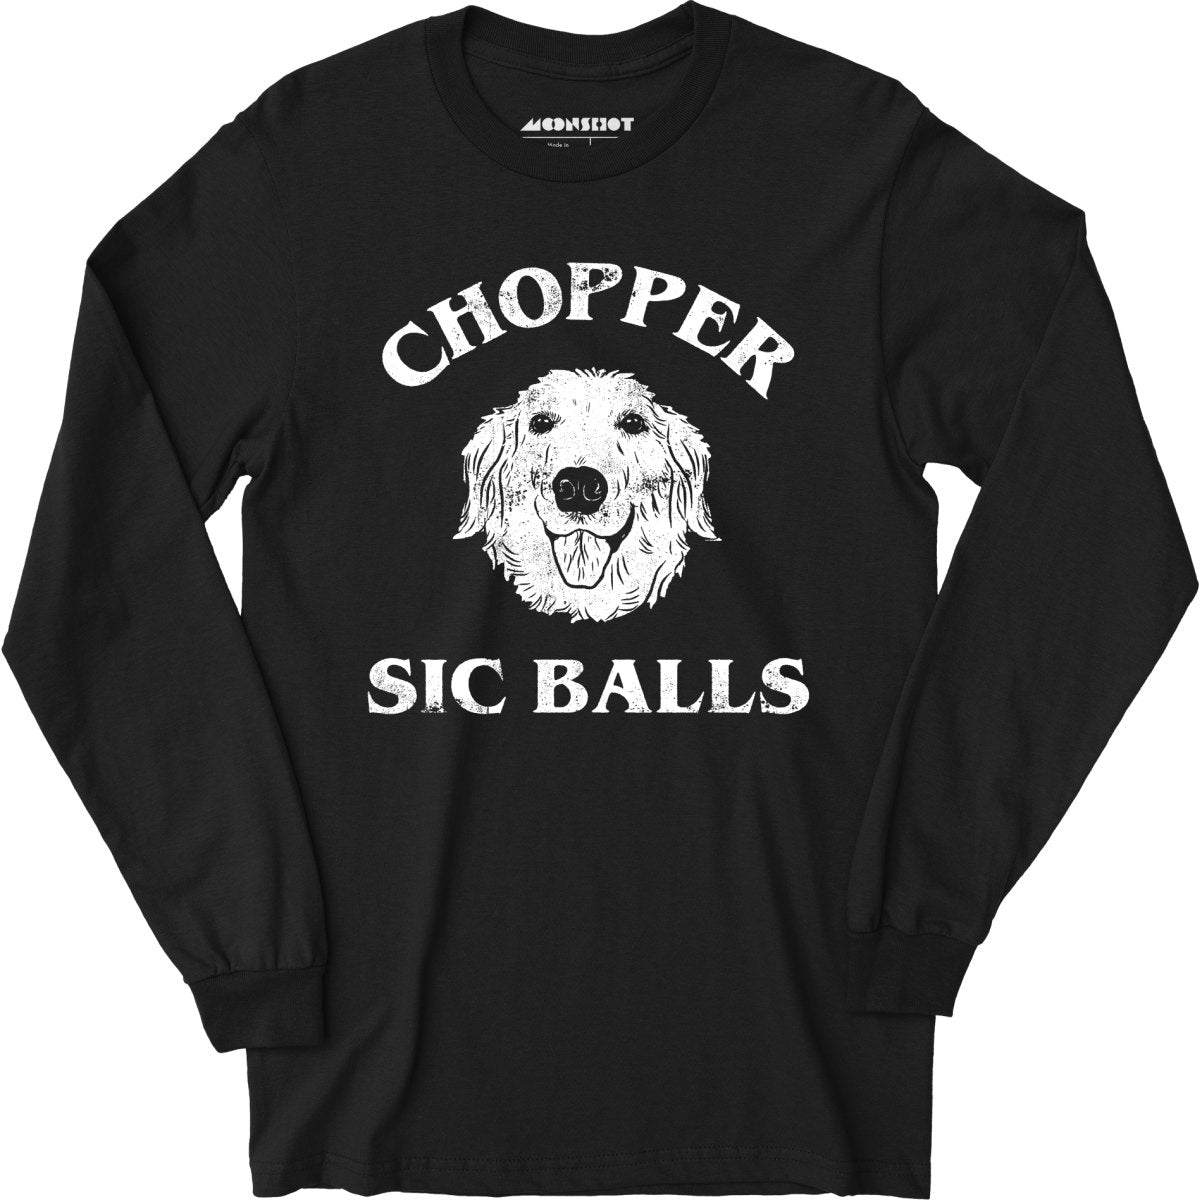 Chopper Sic Balls - Long Sleeve T-Shirt